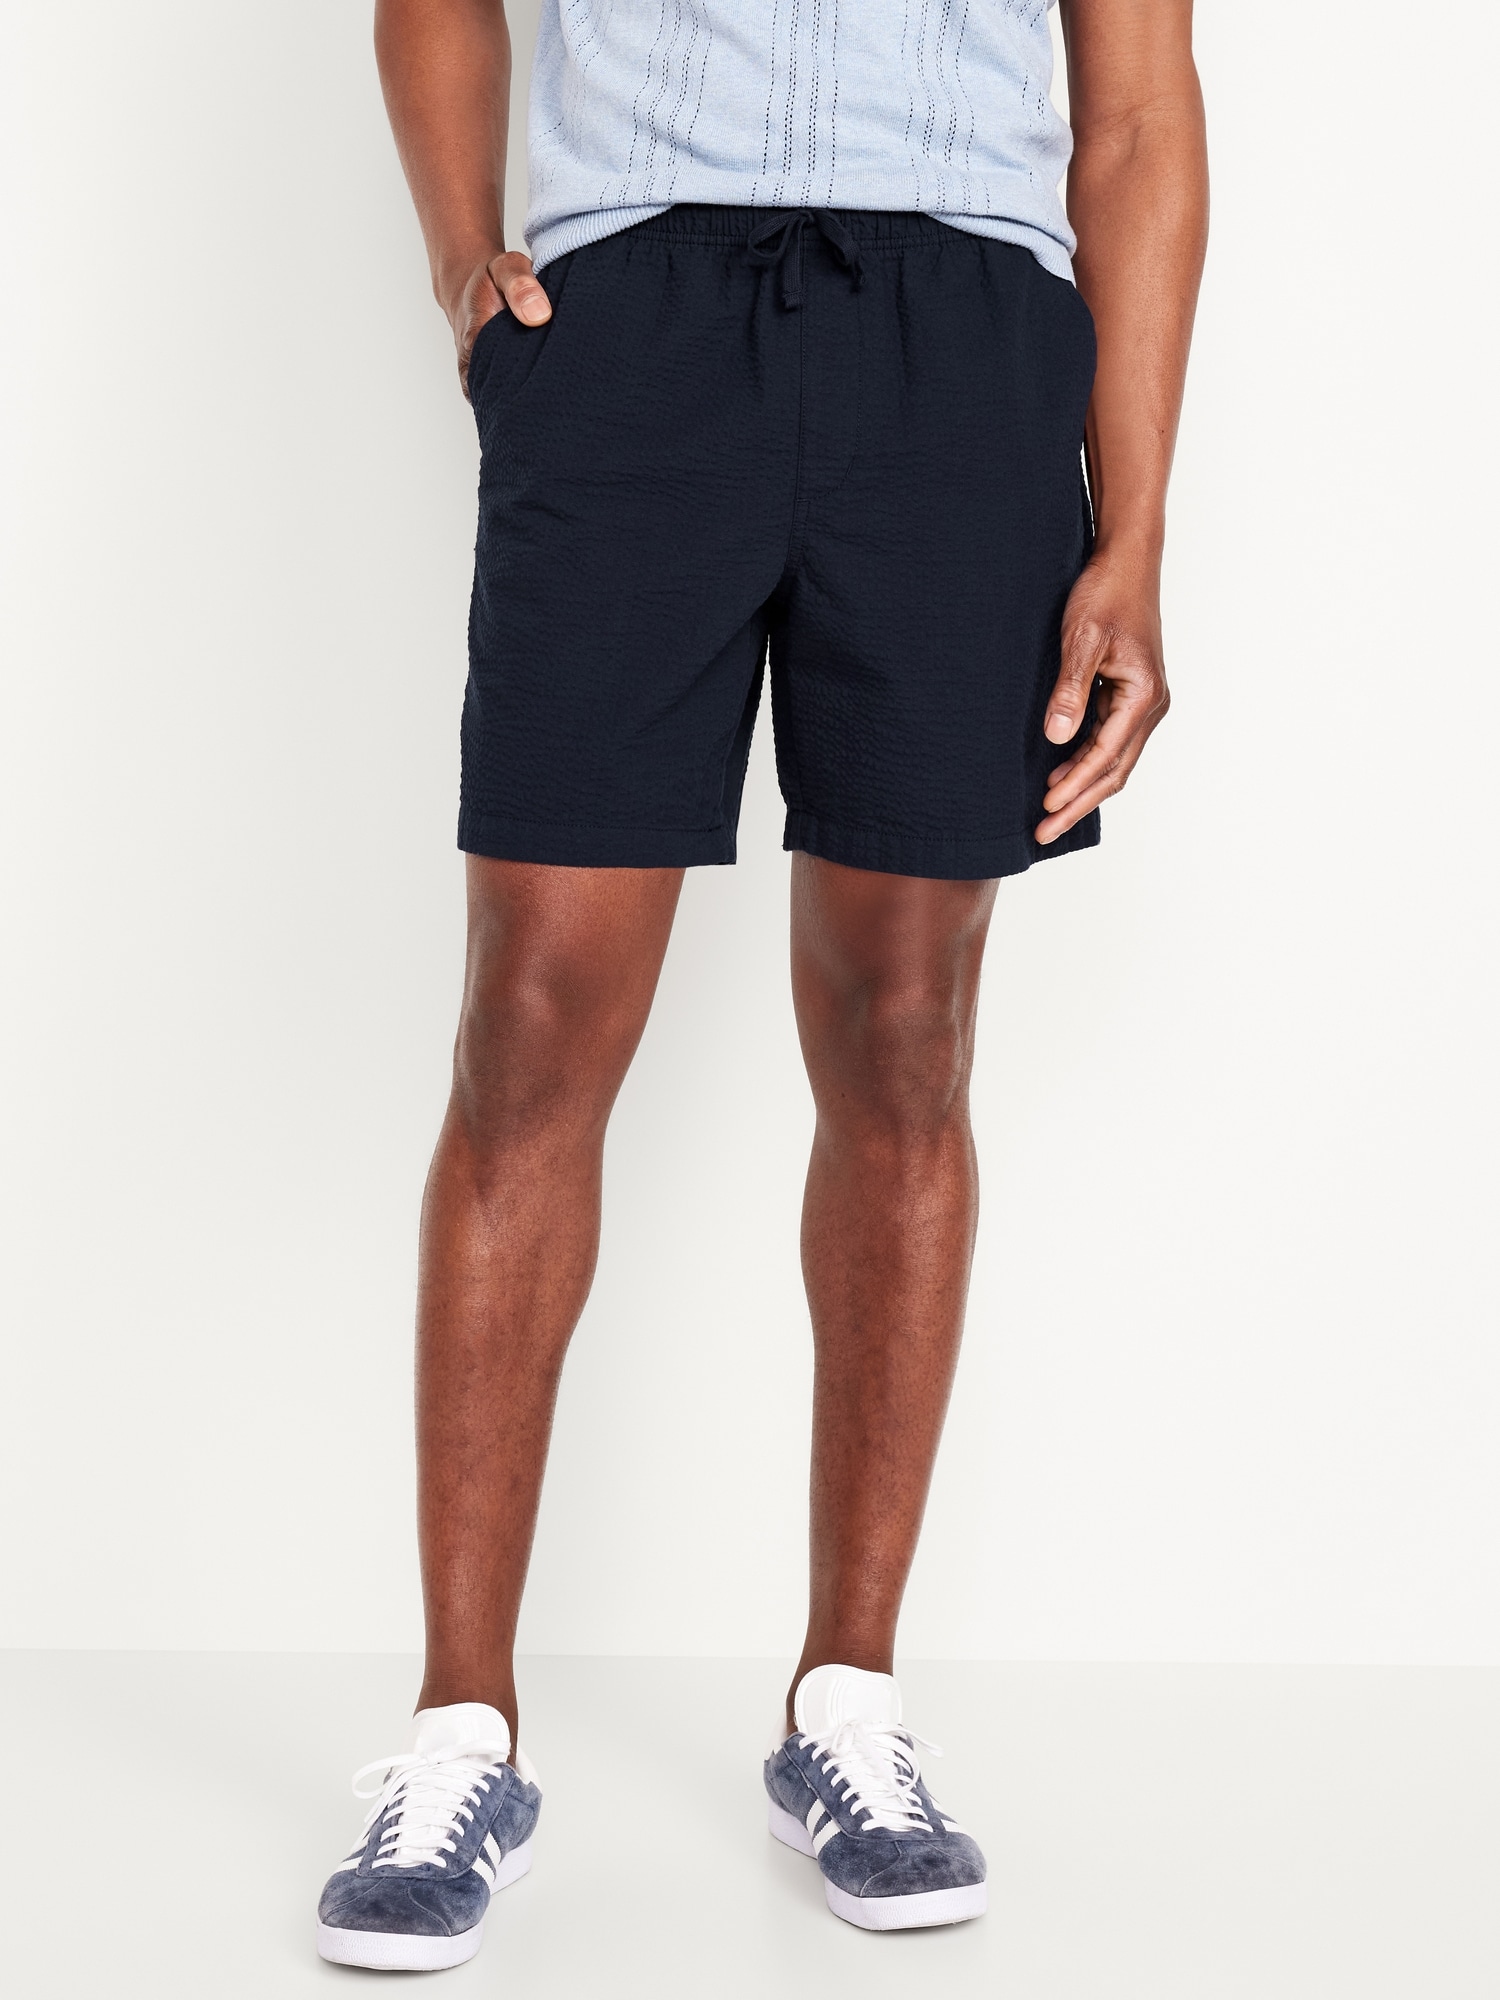 Seersucker Jogger Shorts -- 7-inch inseam